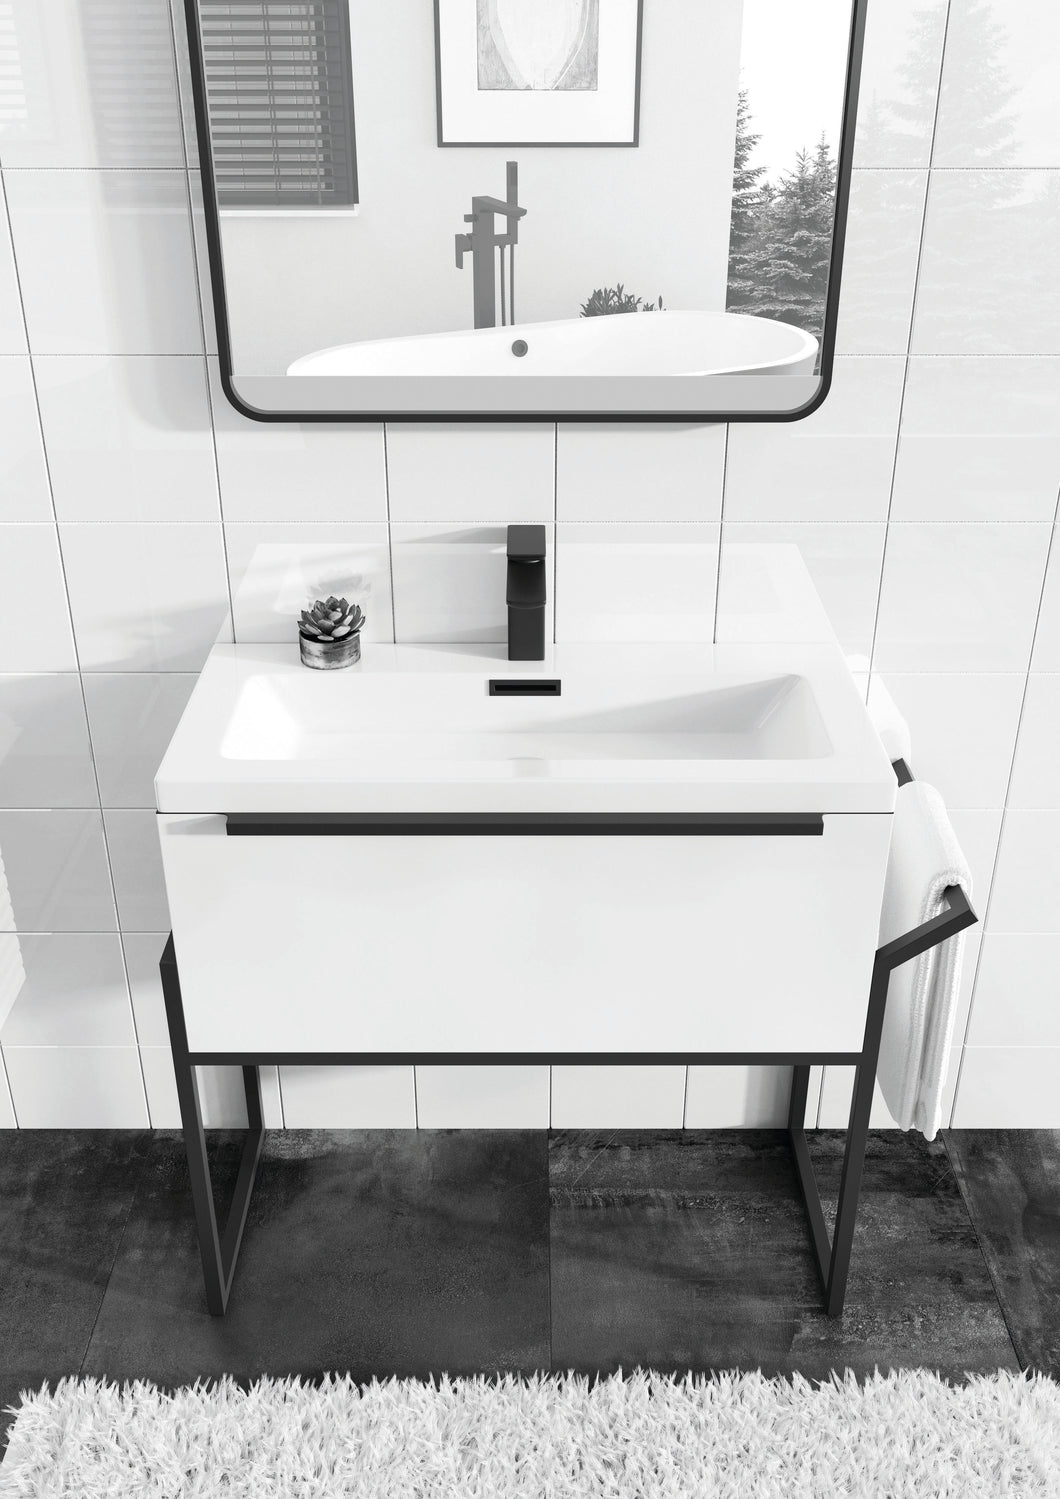 Mono Black 500, 600 or 800mm Rectangular Basin Freestanding Bathroom Vanity Floor Mounted with Black Tap